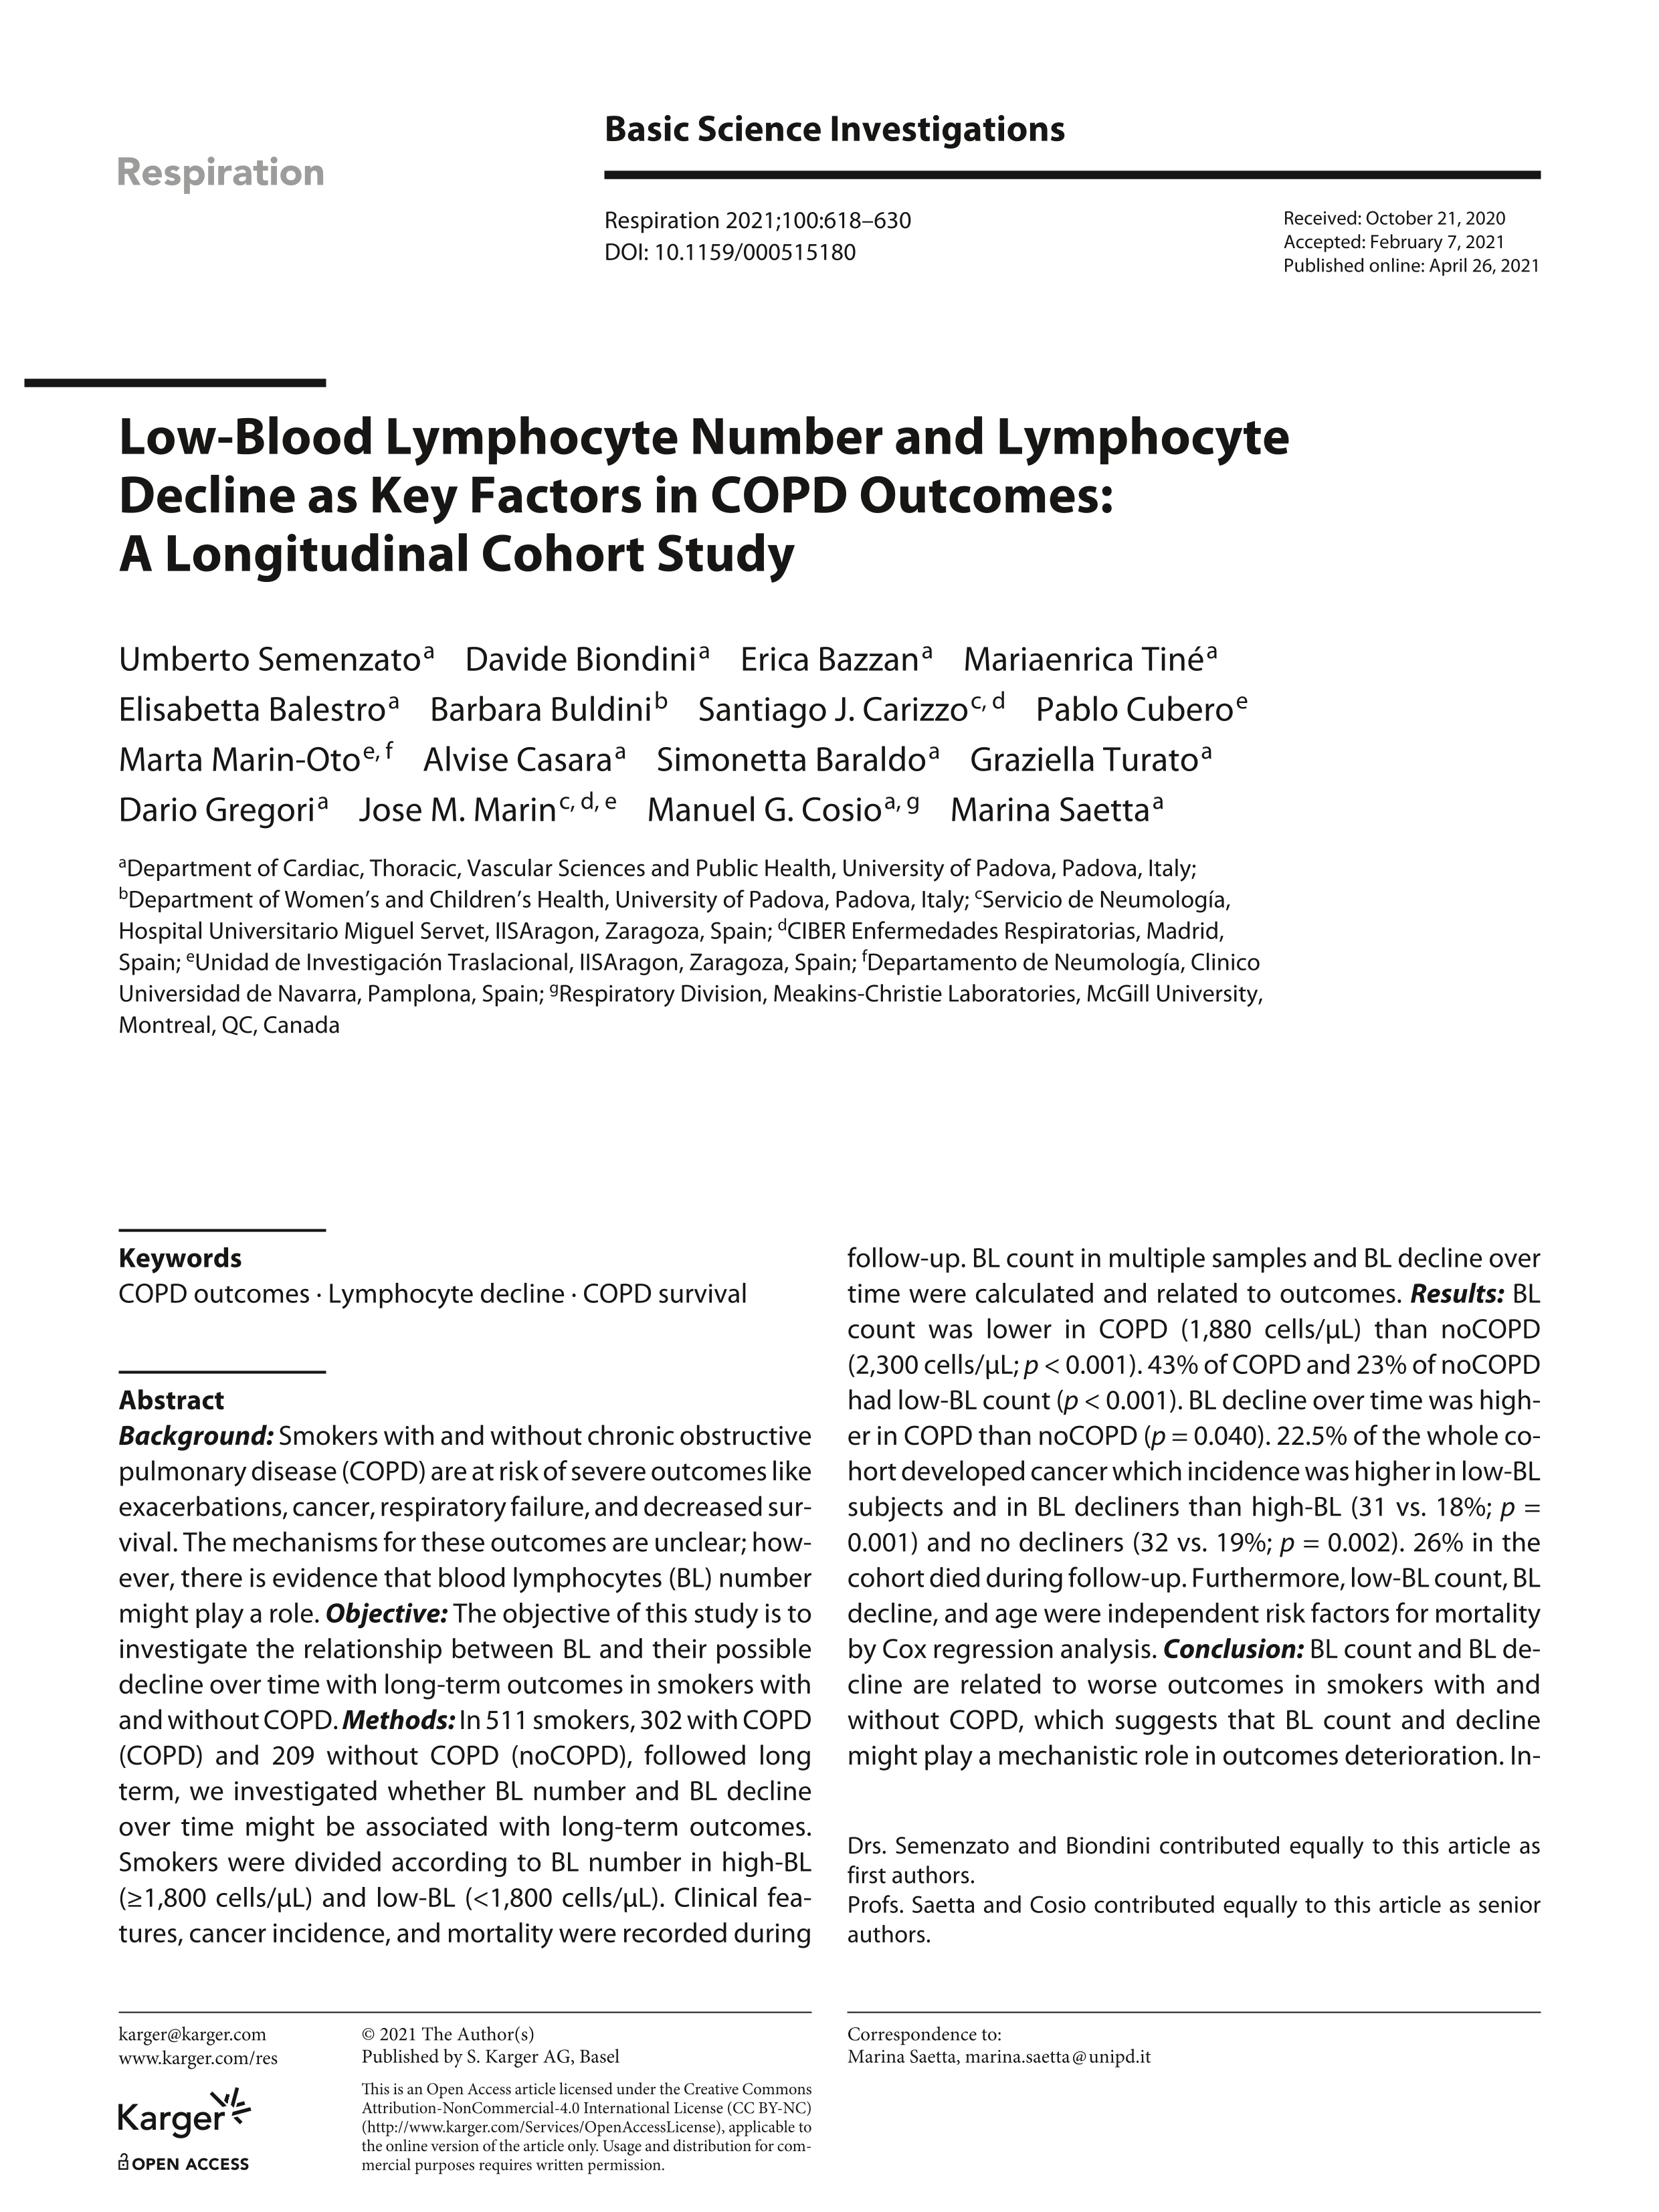 Low-blood lymphocyte number and lymphocyte decline as key factors in COPD outcomes: a longitudinal cohort study